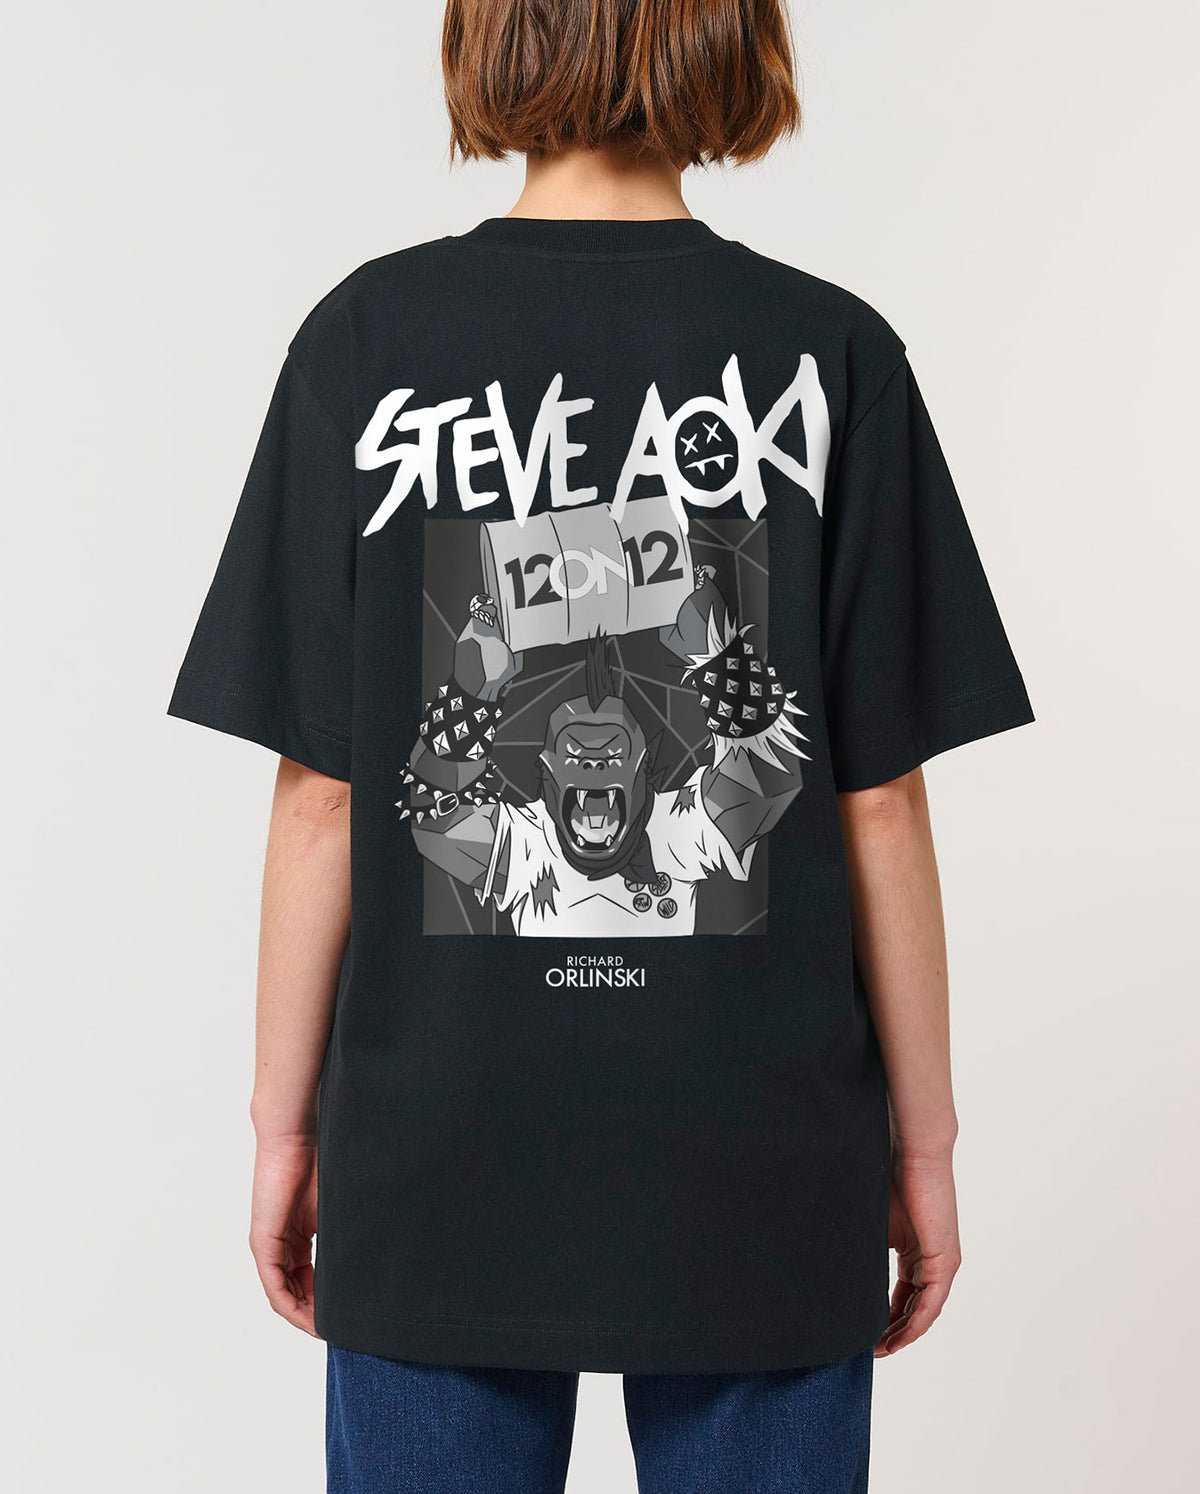 Steve Aoki X Richard Orlinski Punk Kong T-Shirt